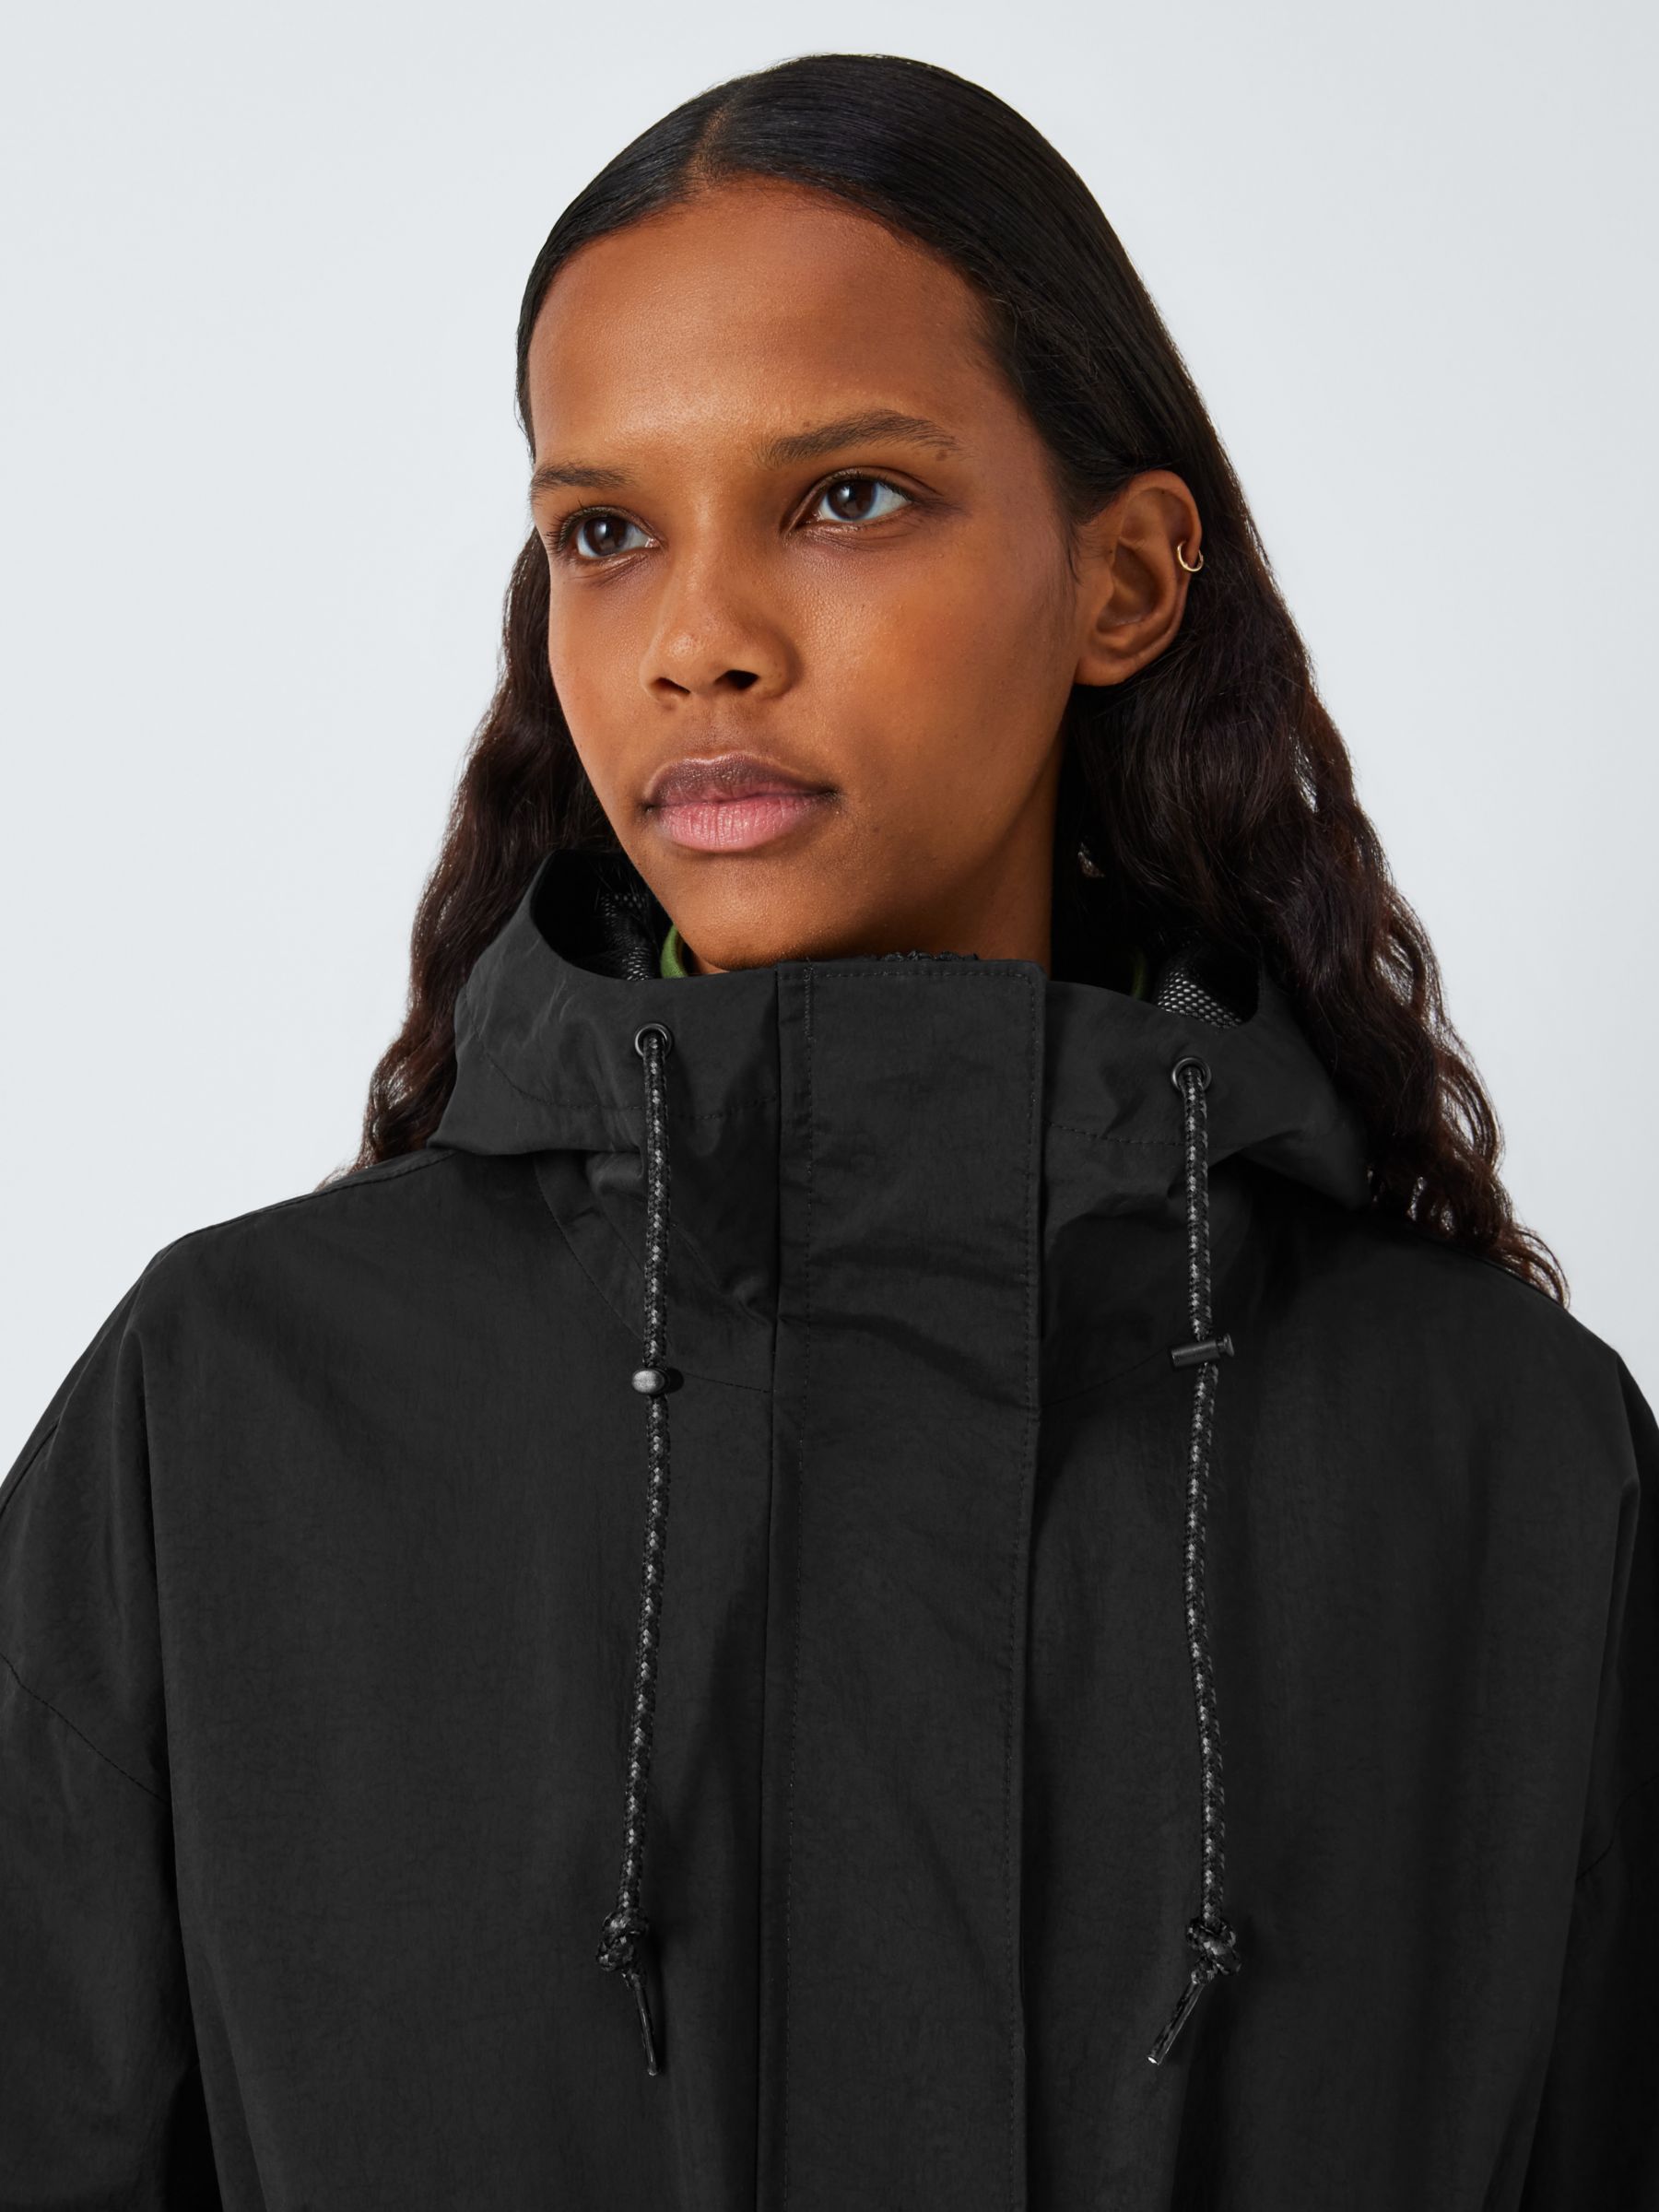 Columbia Women's Splash Side Jacket, Black Crinkle, S